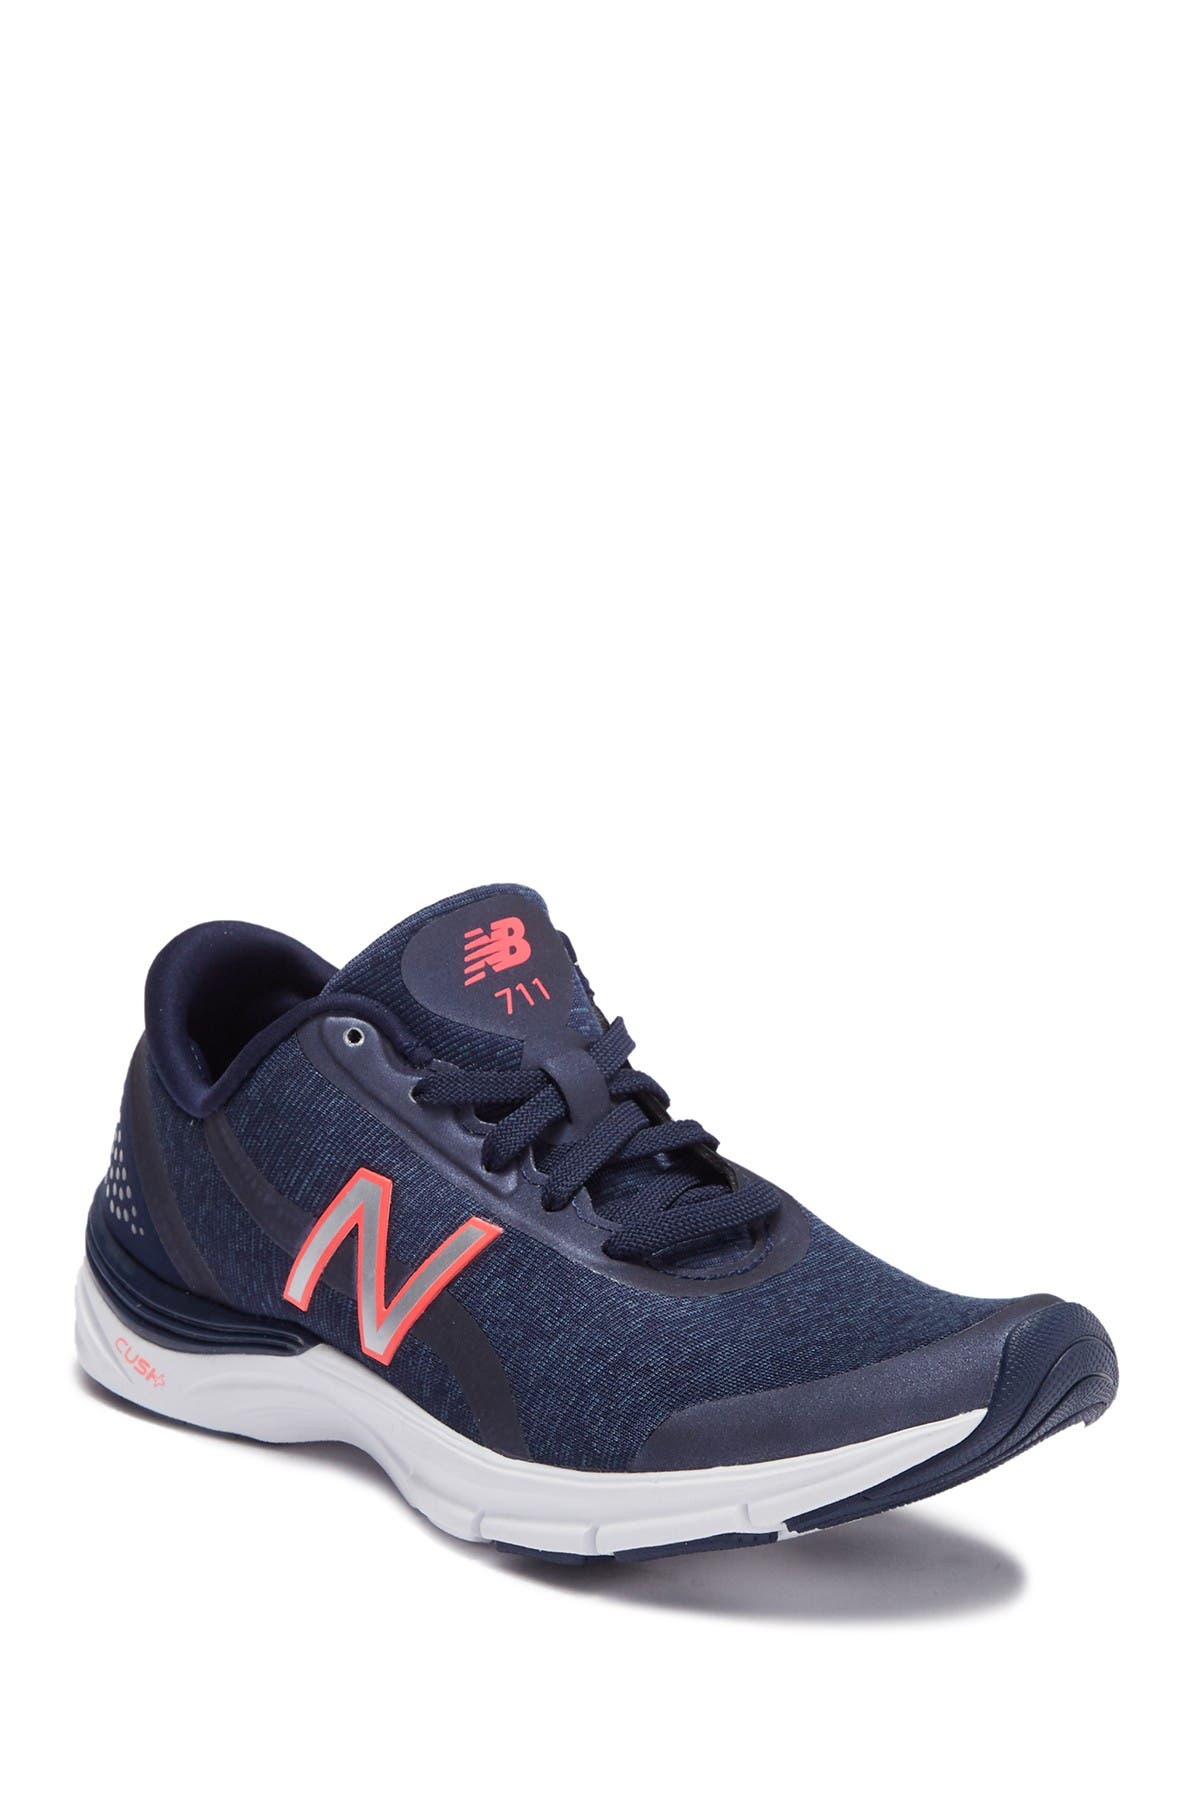 New Balance | 711 V3 Running Shoe 